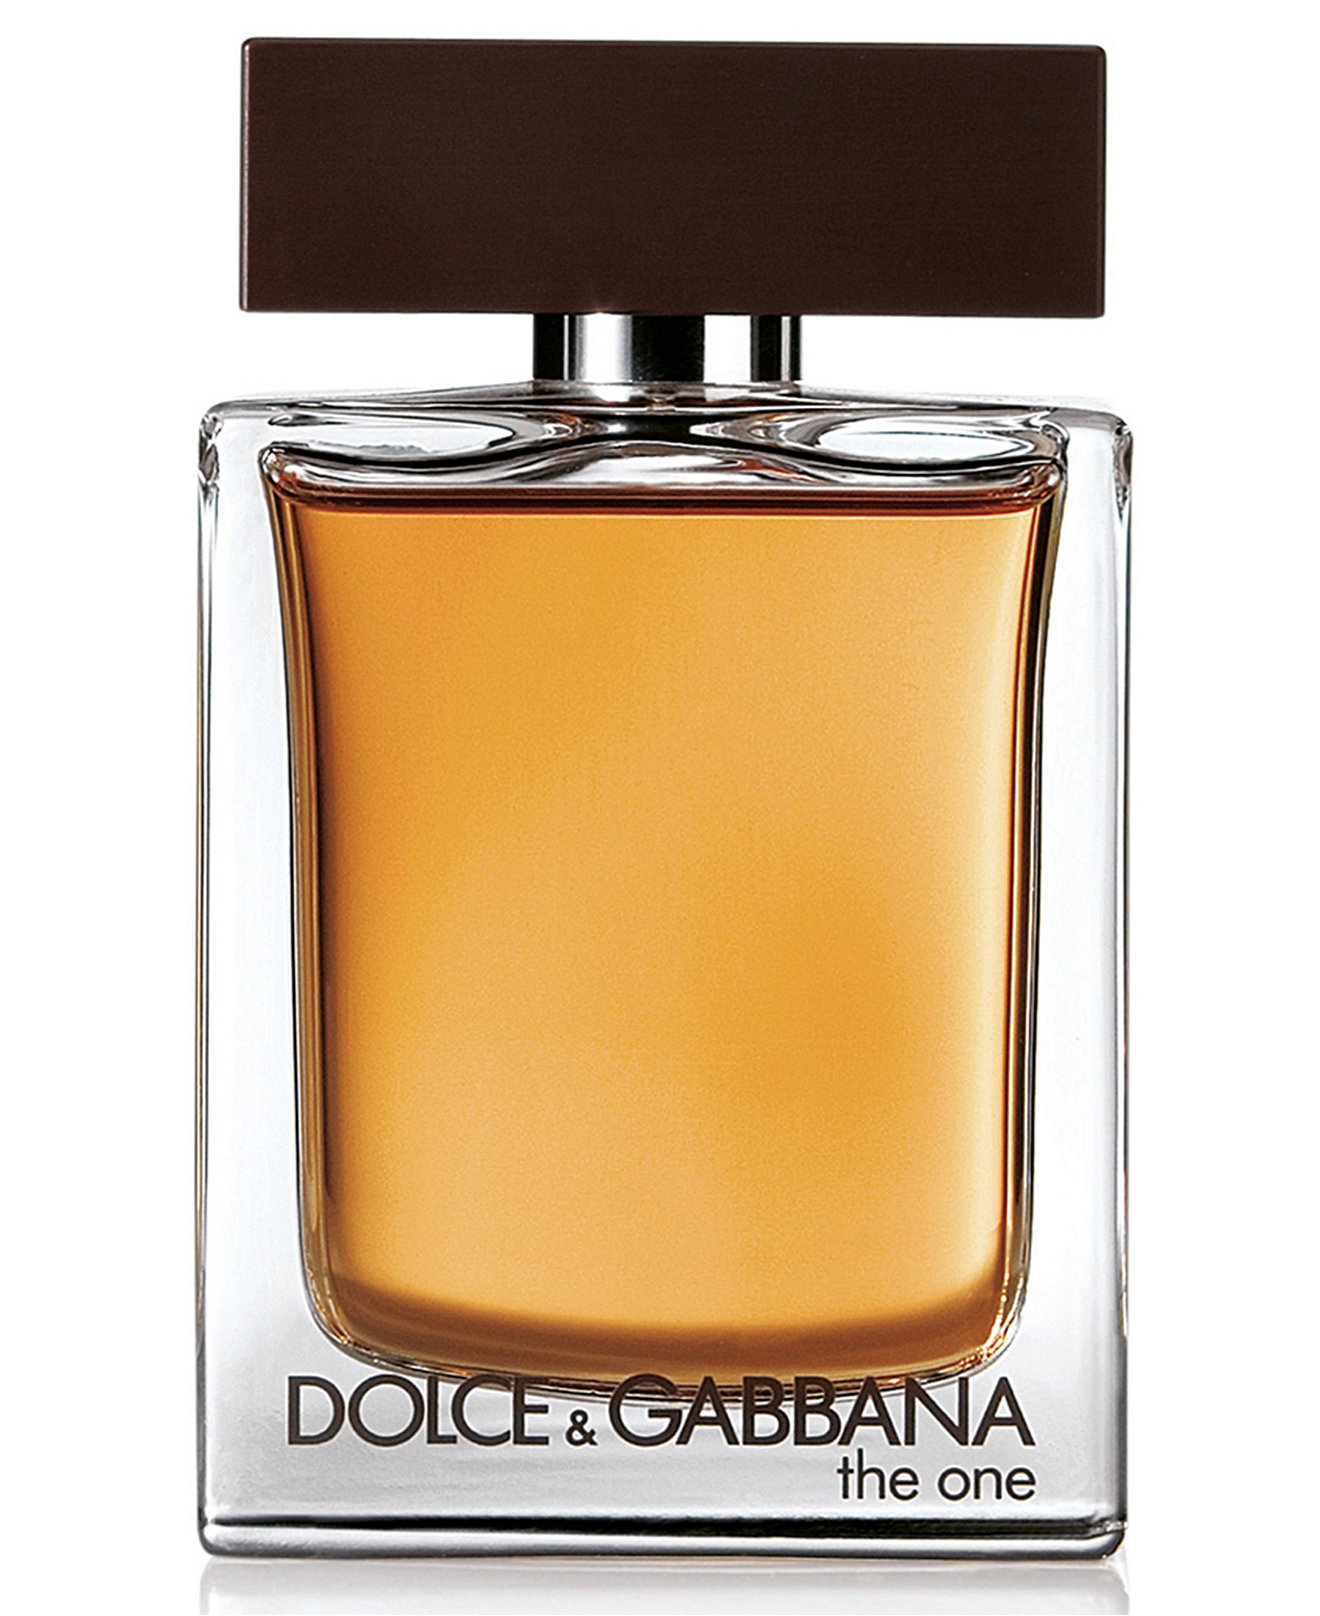 Dolce & Gabbana The One by Dolce & Gabbana for Men Eau de Toilette Spray 3.4 oz